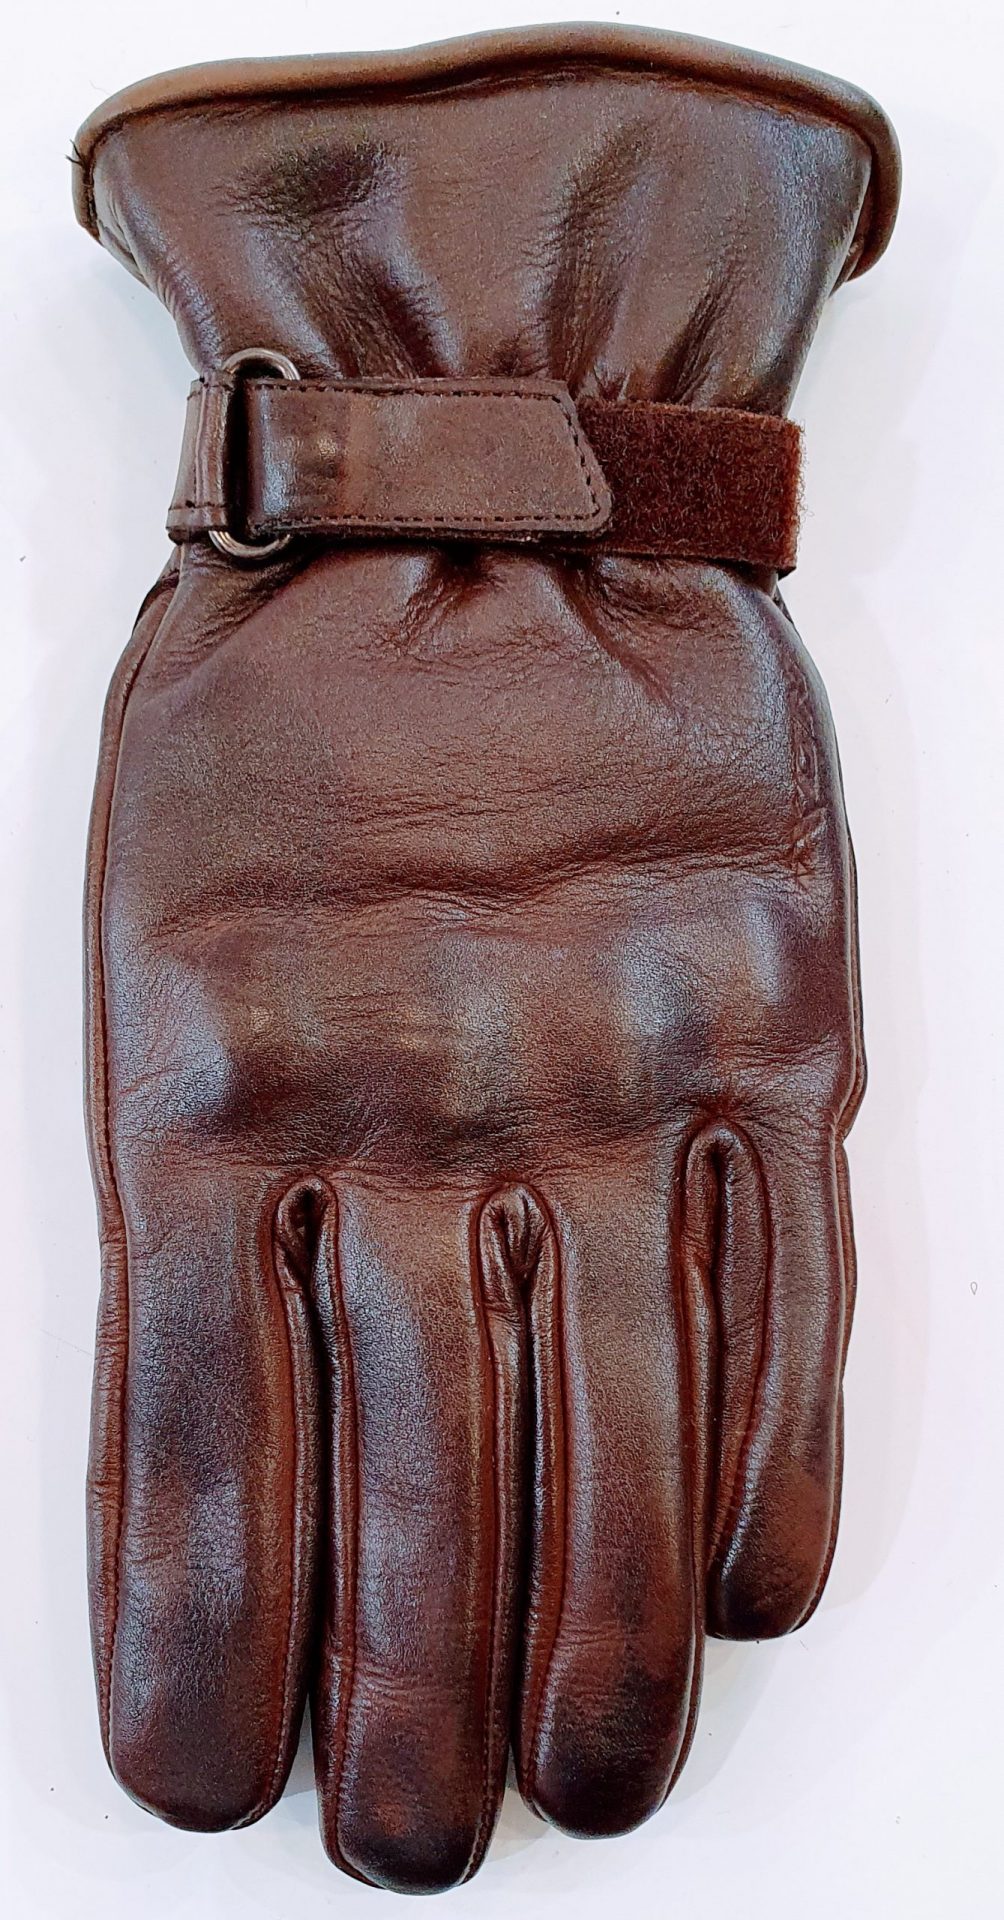 https://elmo-casque.com/wp-content/uploads/2020/11/5874-gants-moto-homologue-femme-hiver-cuir-marron-vintage-urbain-scaled.jpg